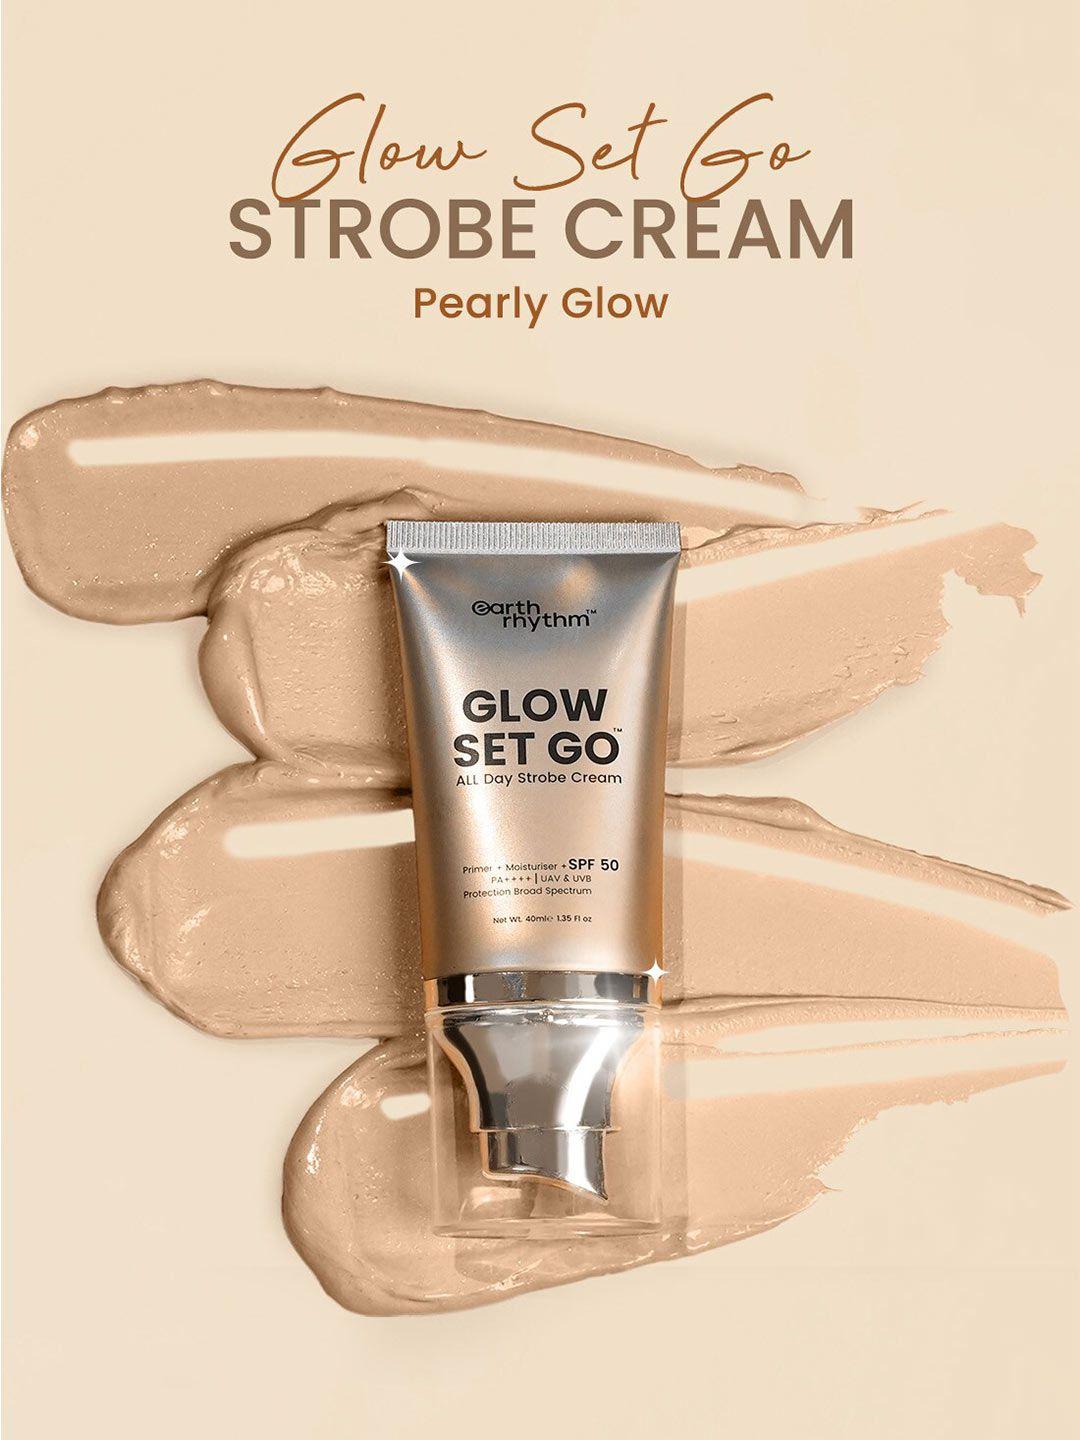 earth-rhythm-glow-set-go-strobe-cream-primer-&-moisturiser-with-spf-50---pearly-glow